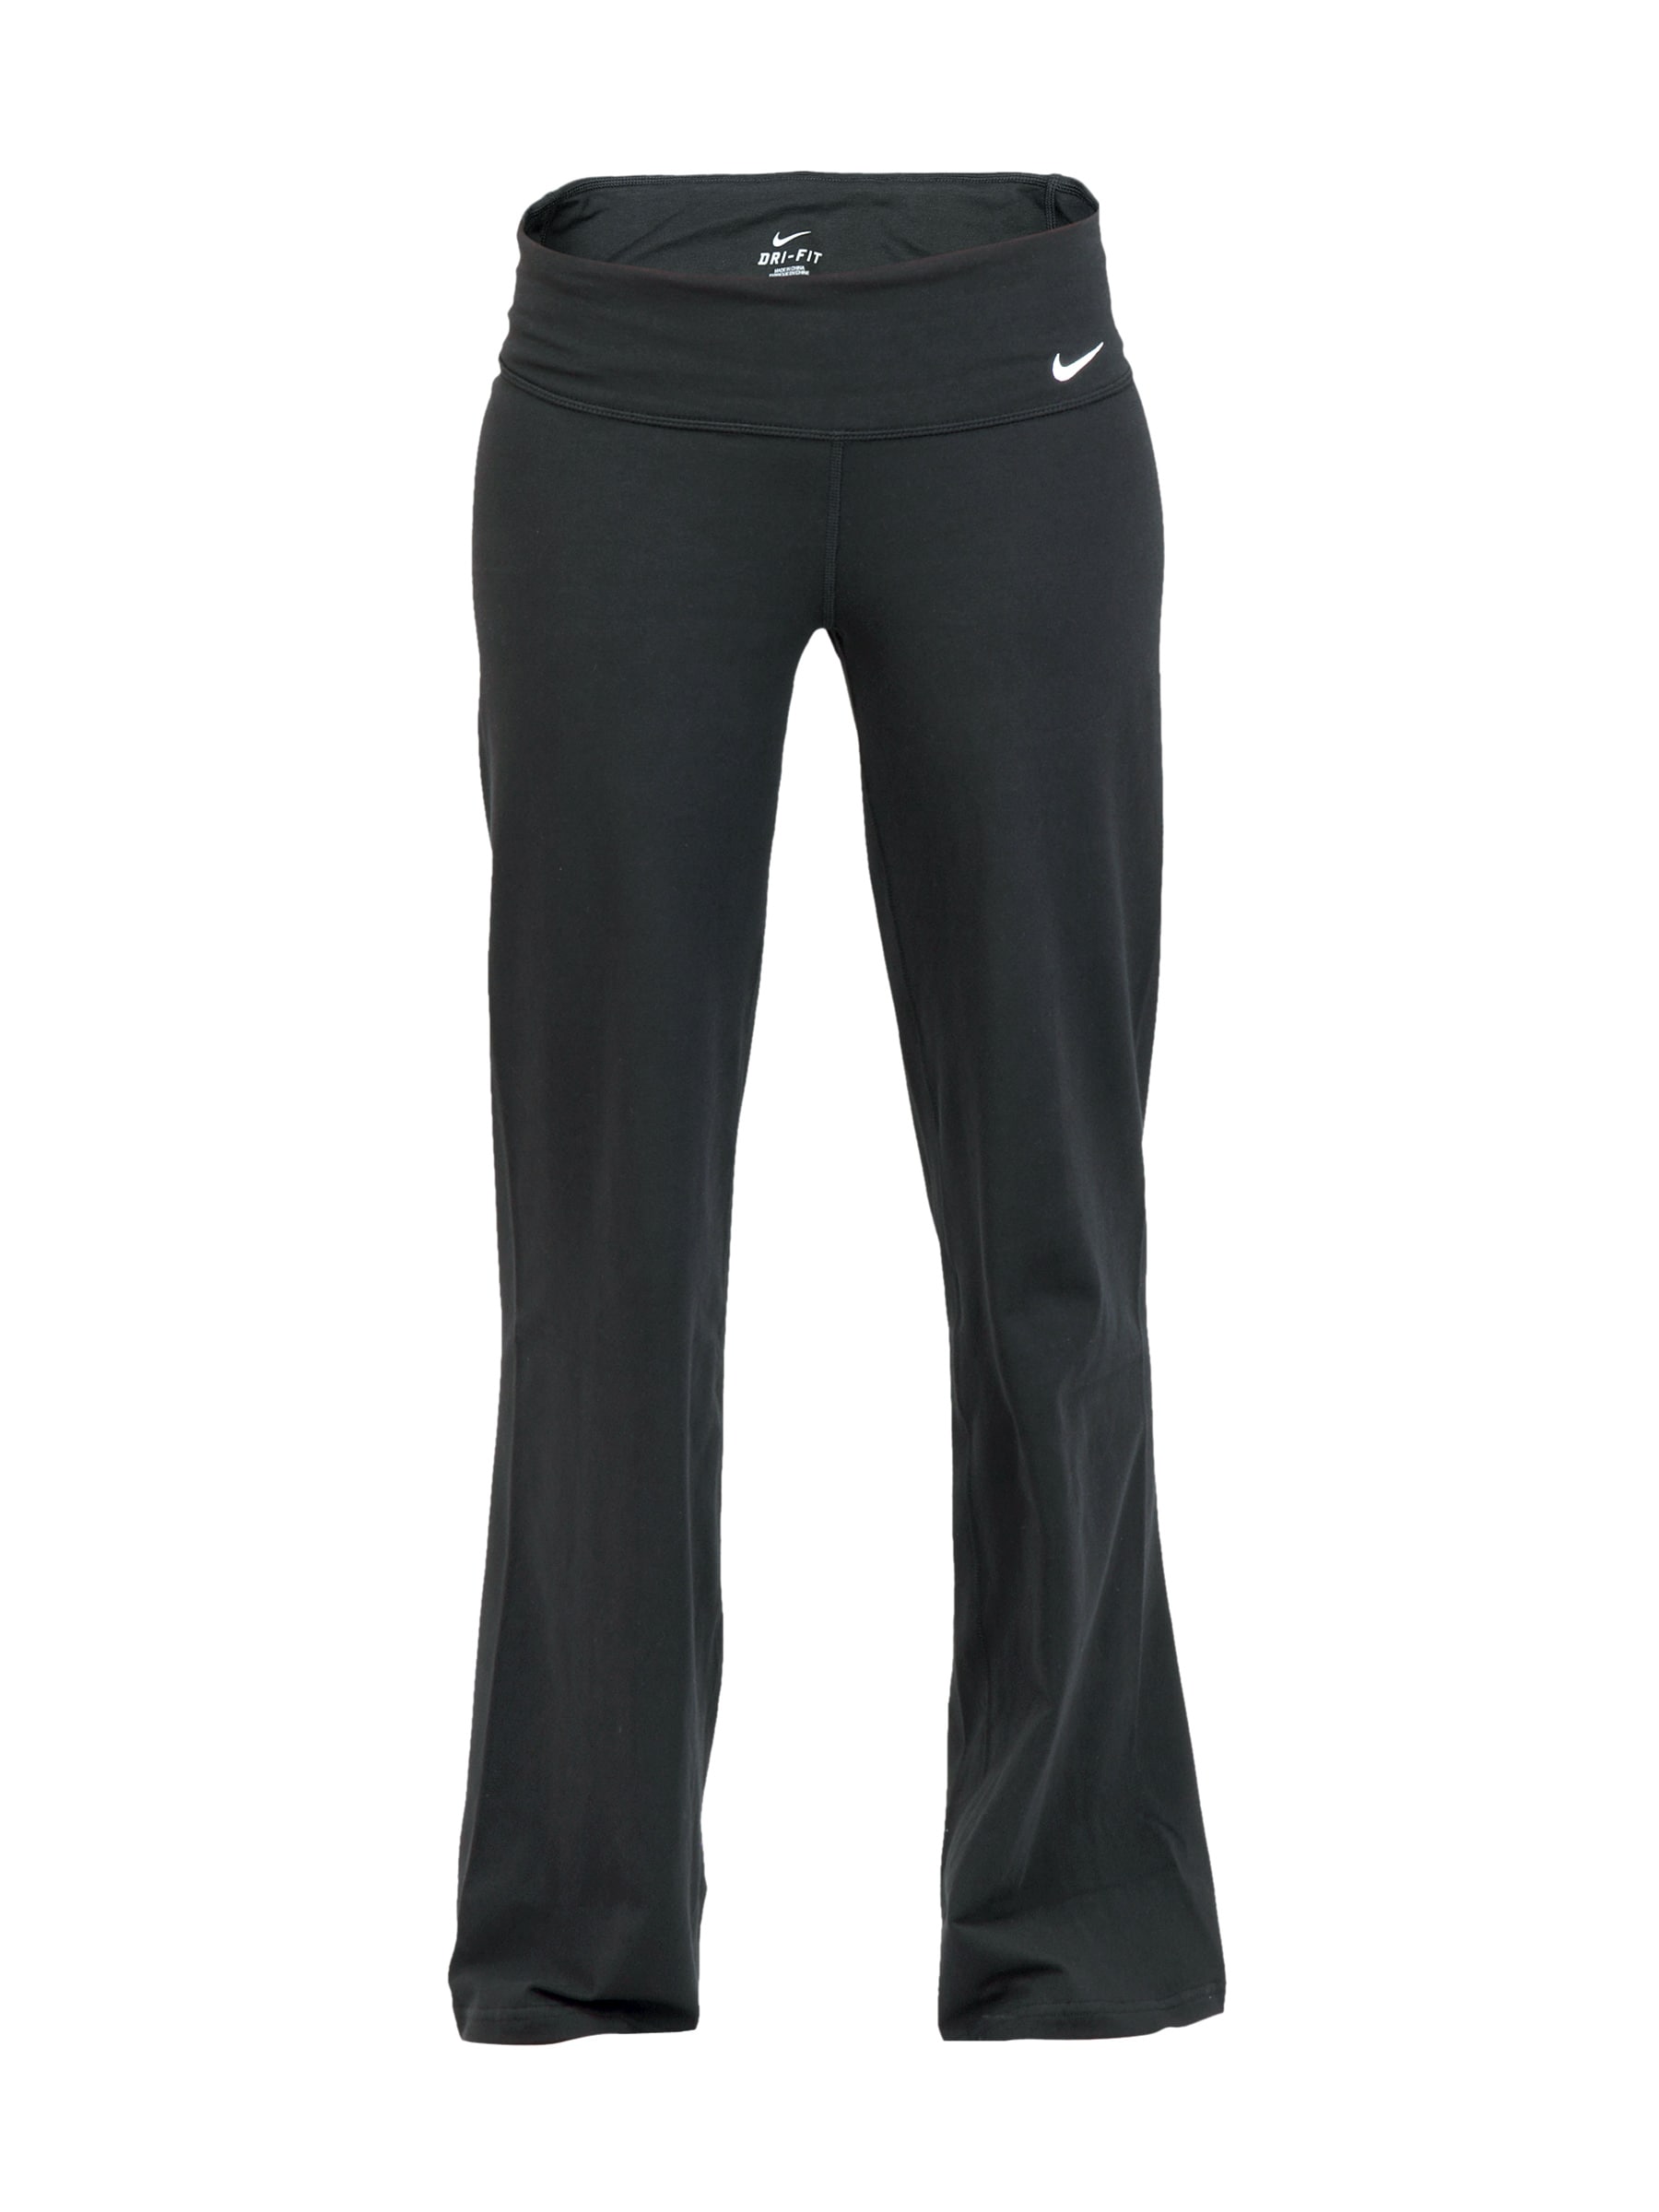 Nike Women AS Regular DF Cotton Black Track Pants